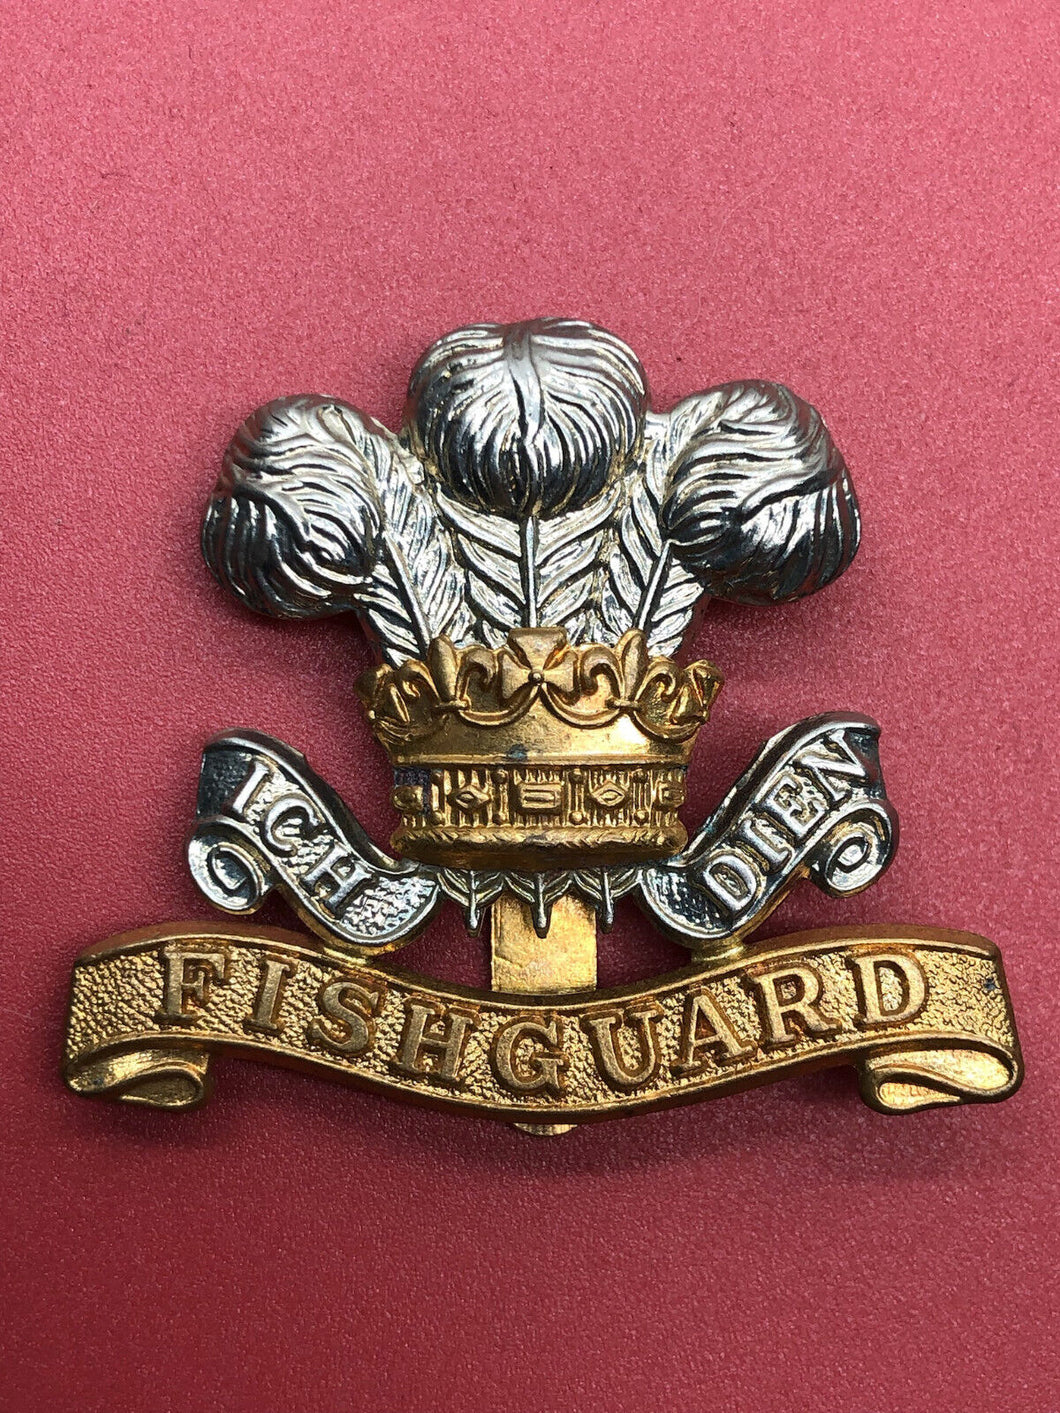 British Army Cap Badge - Pembrookshire Yeomanry Fishguards Reproduction